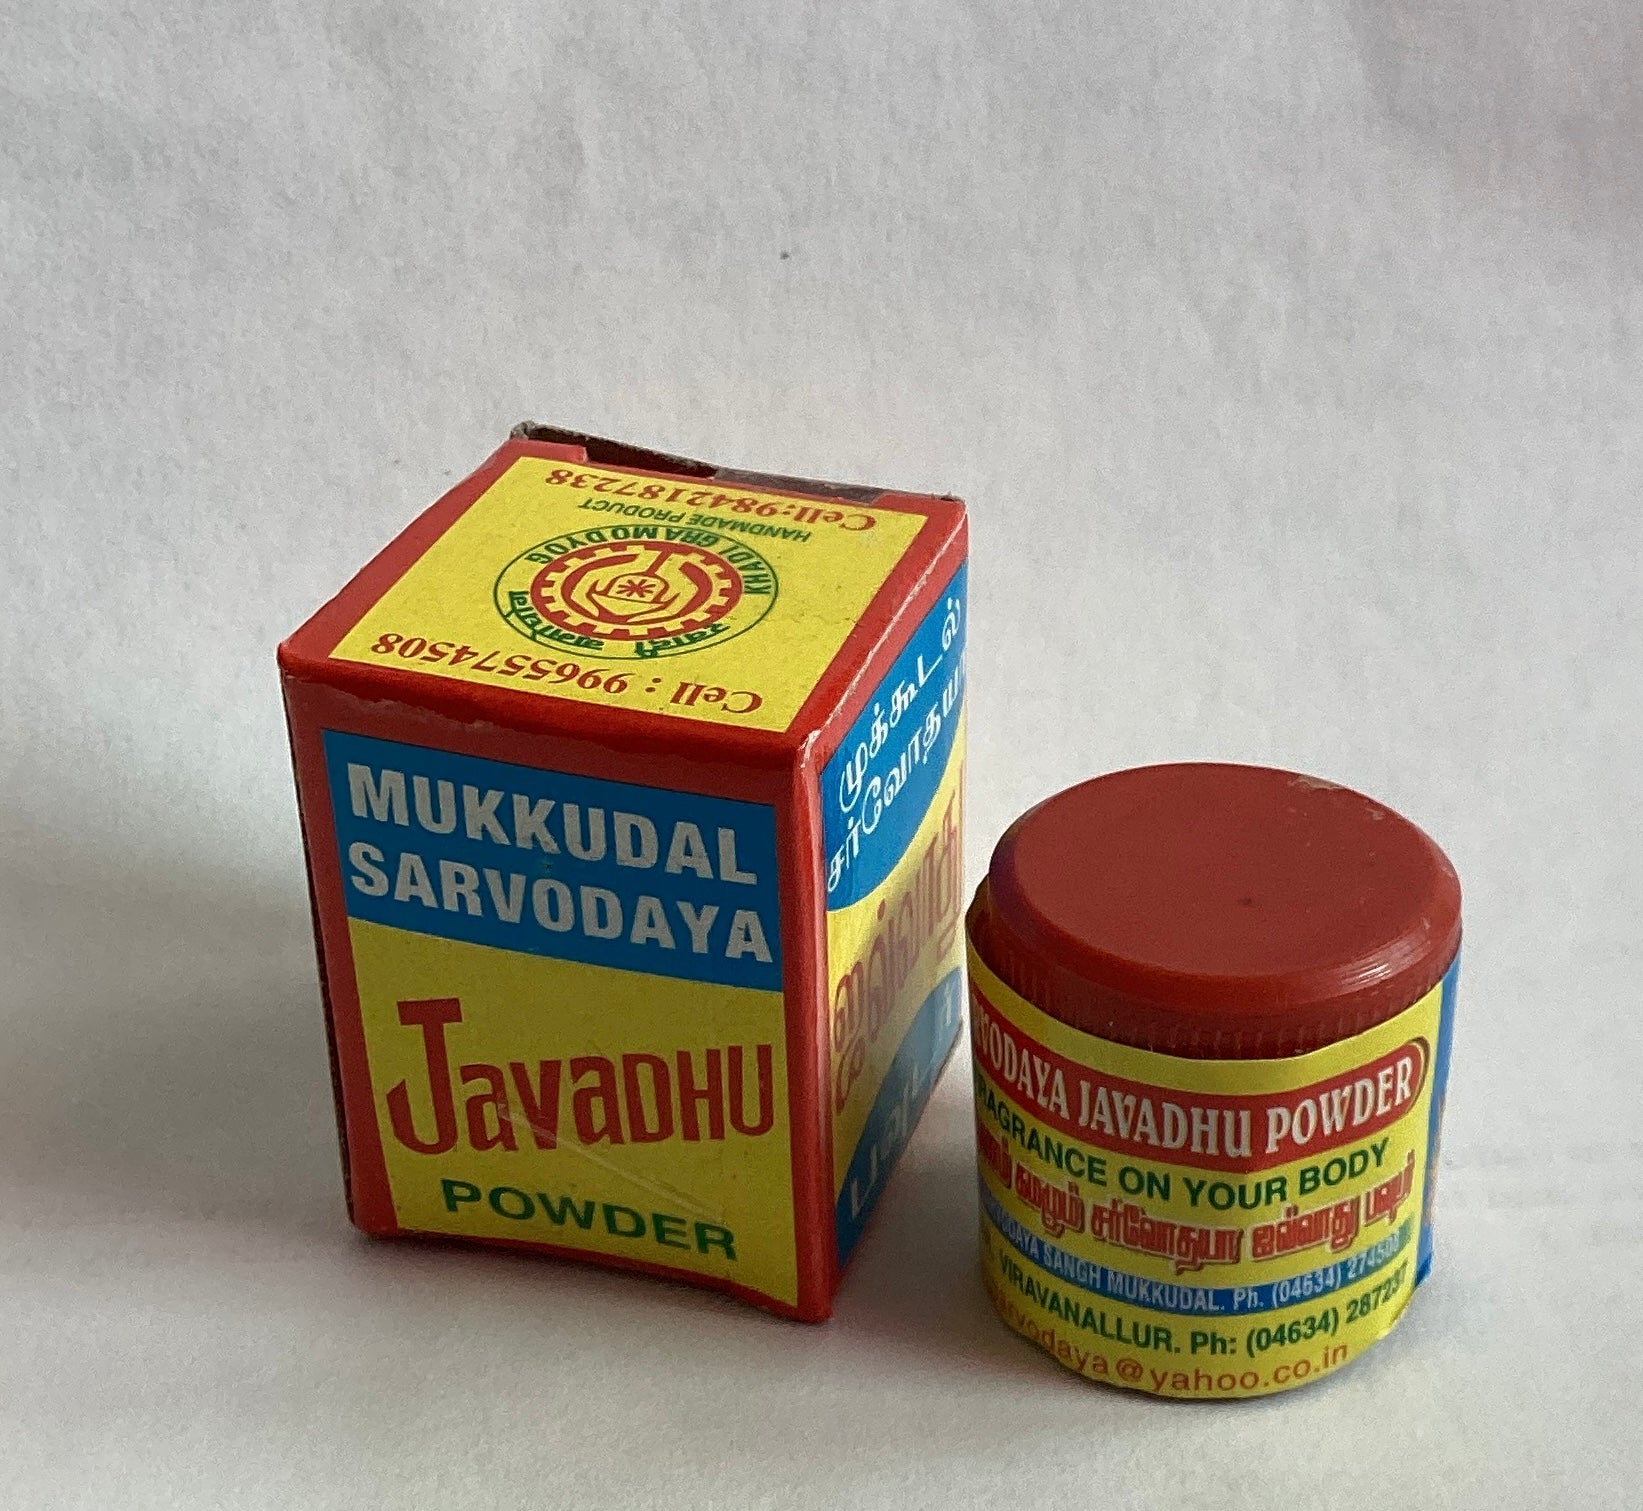 Javadhu powder